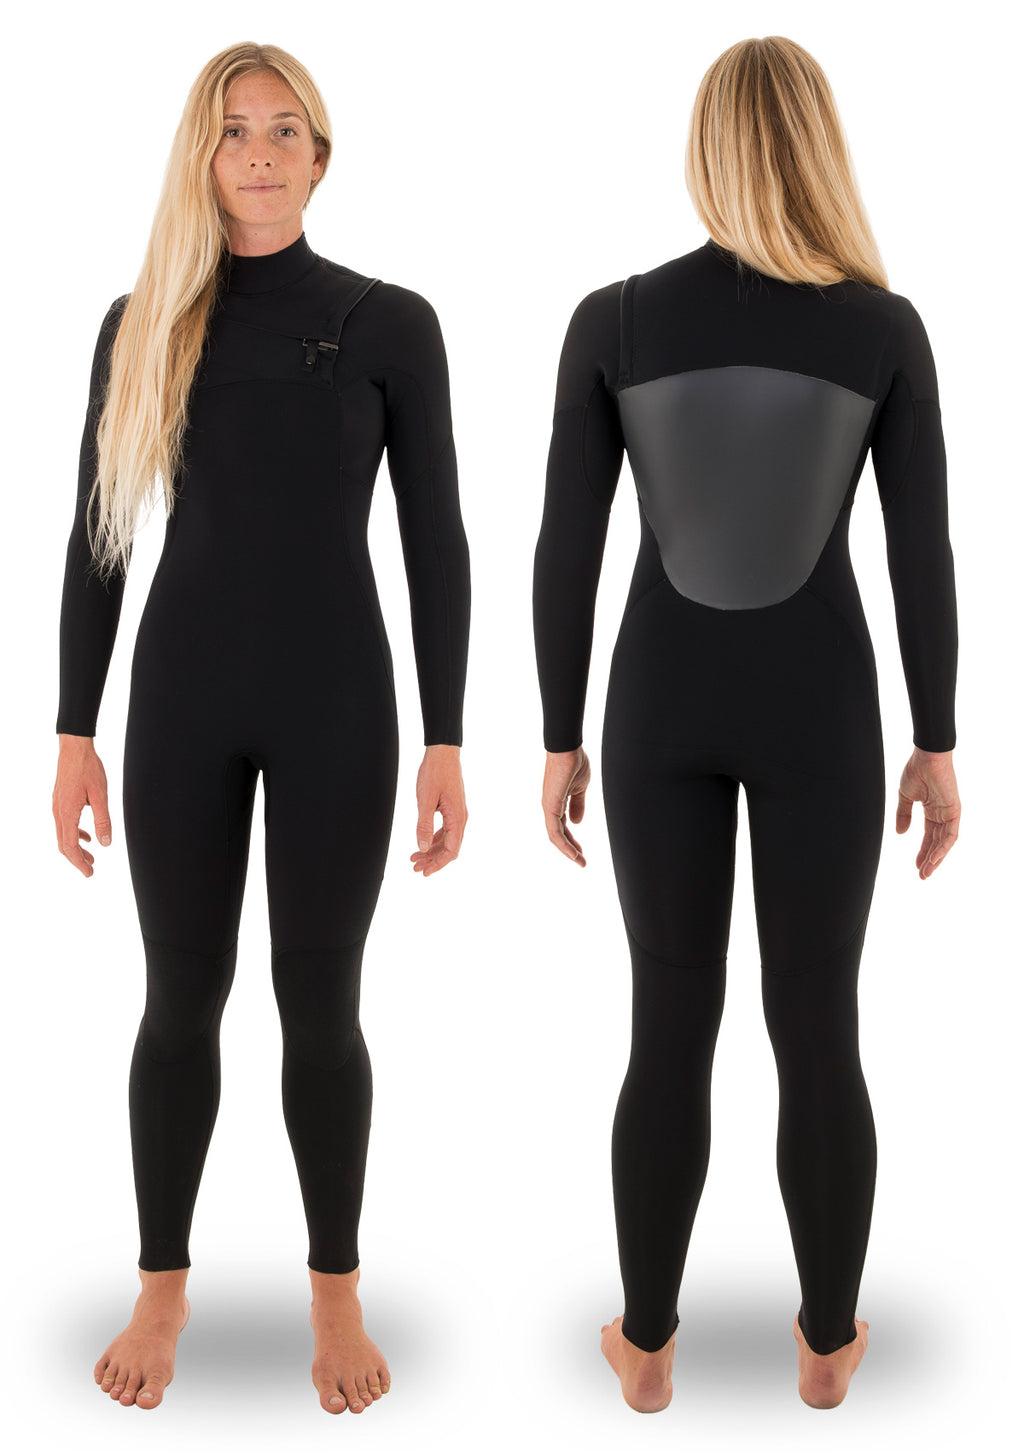 needessentials womens 5/4 chest zip thermal winter wetsuit surfing black 